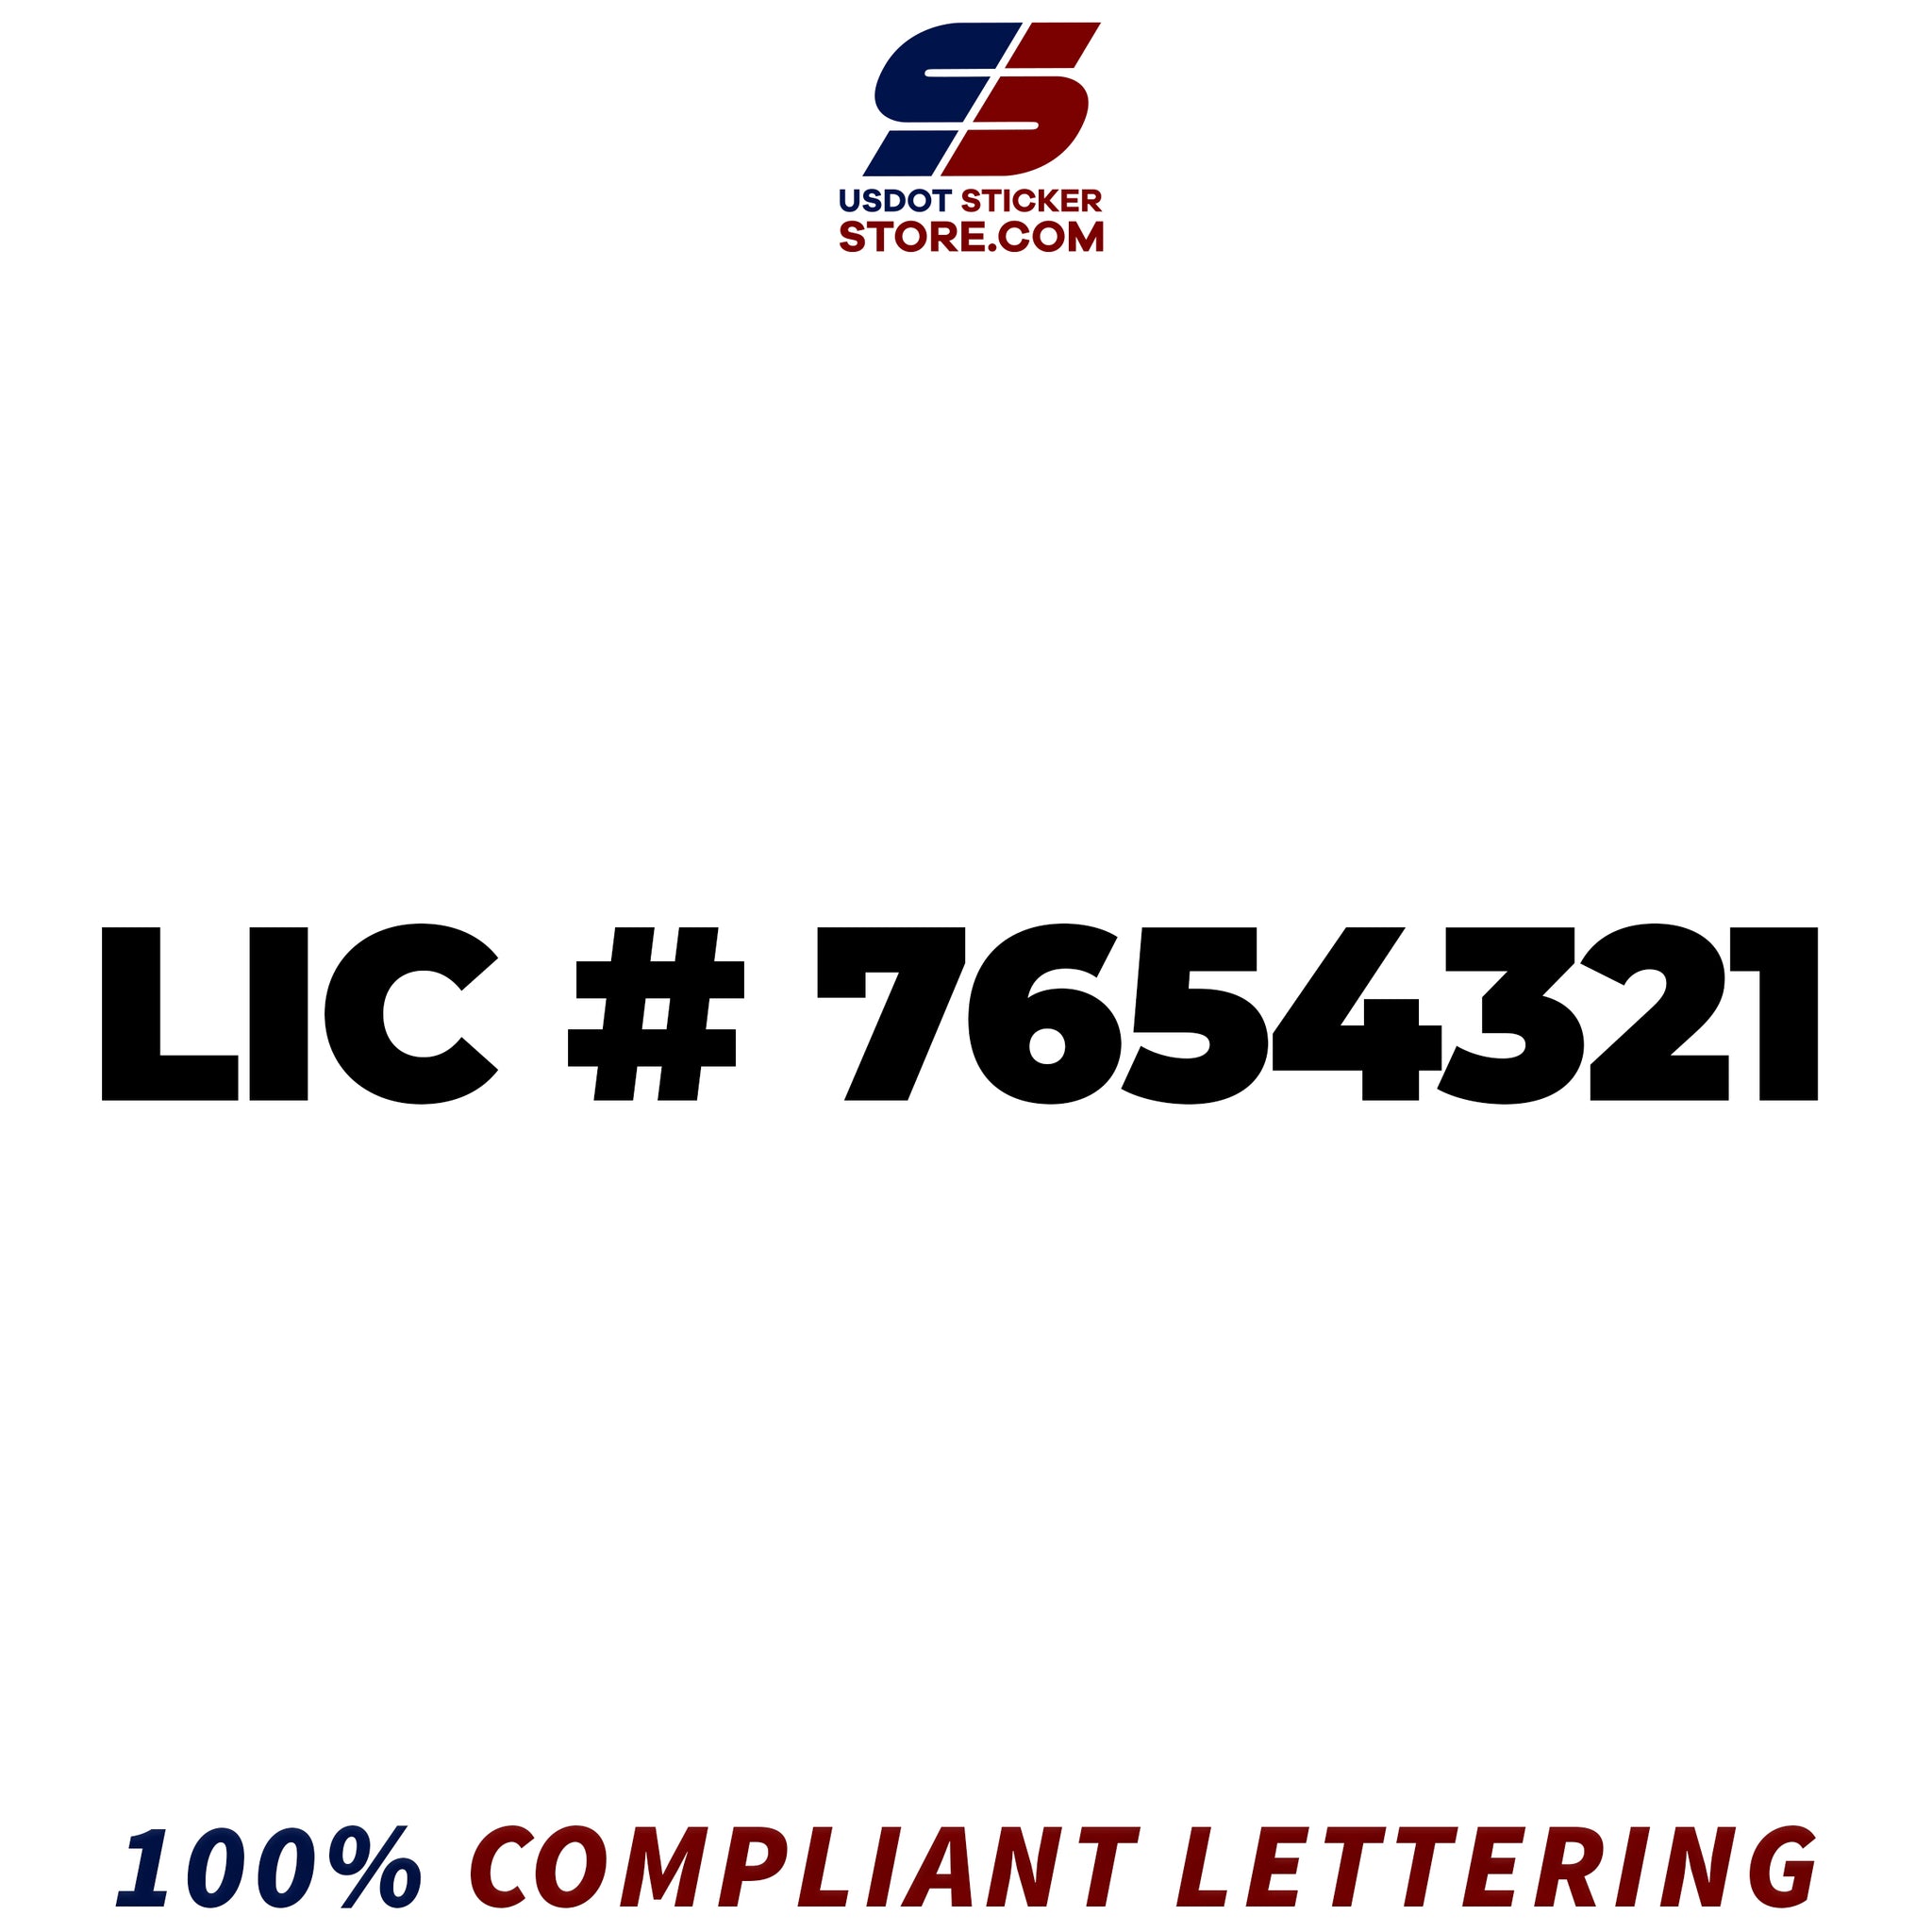 LIC # sticker